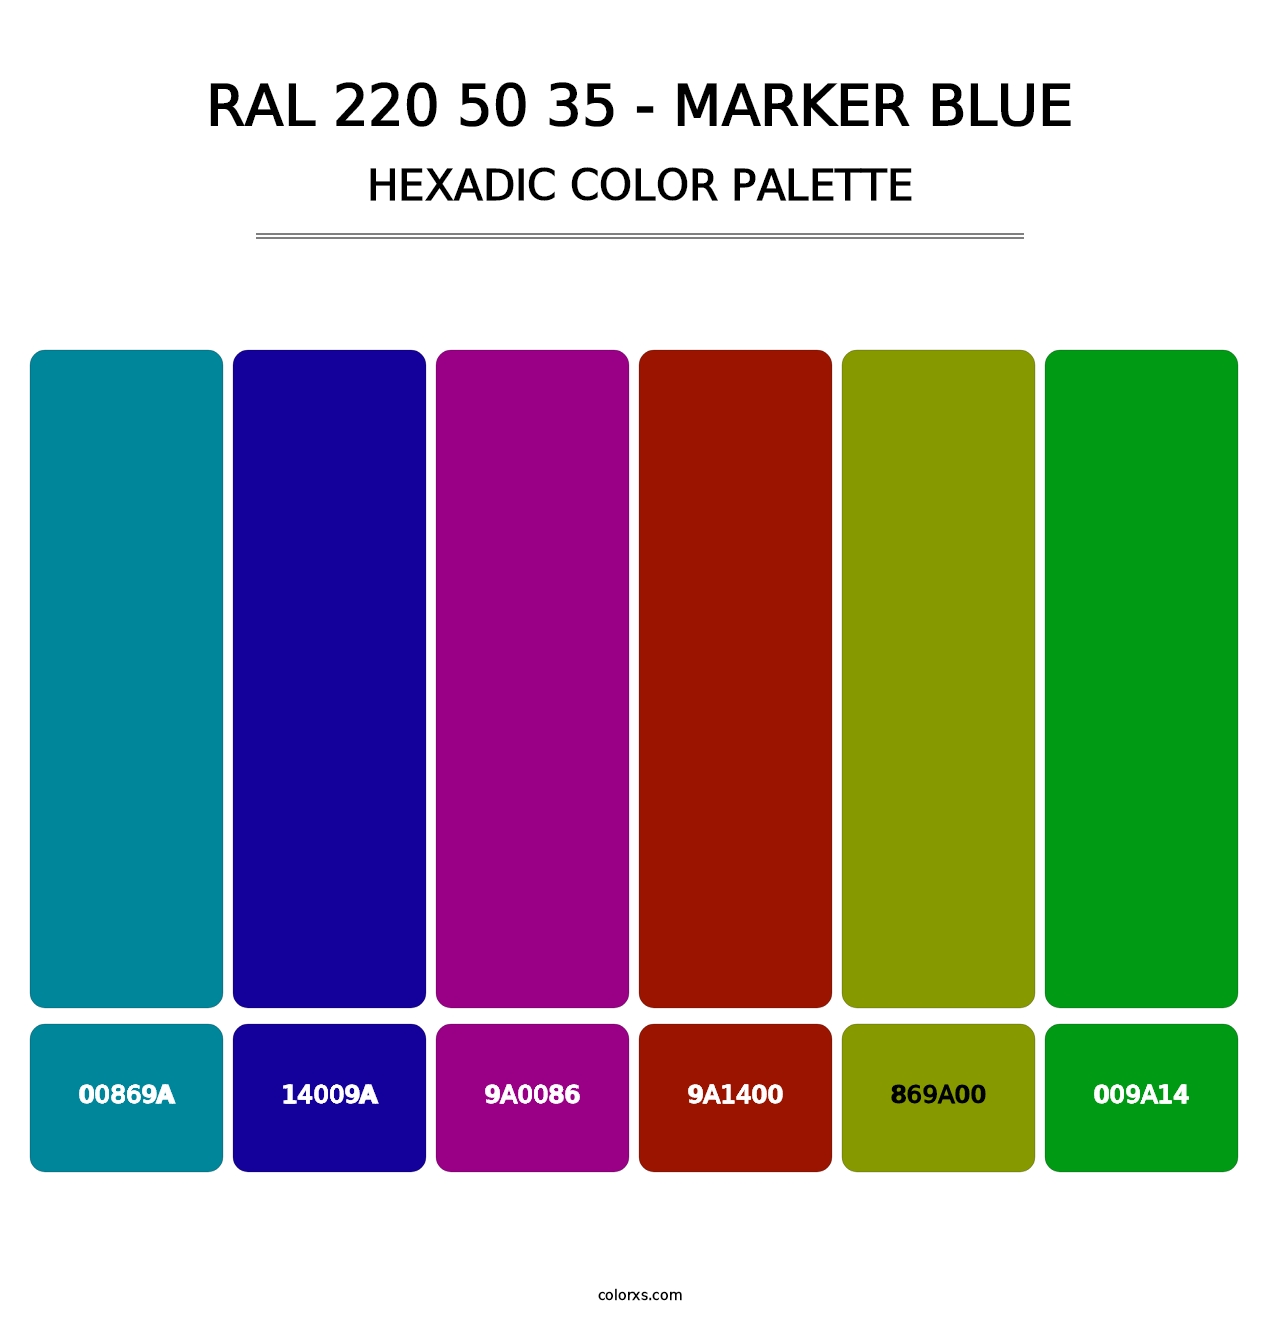 RAL 220 50 35 - Marker Blue - Hexadic Color Palette